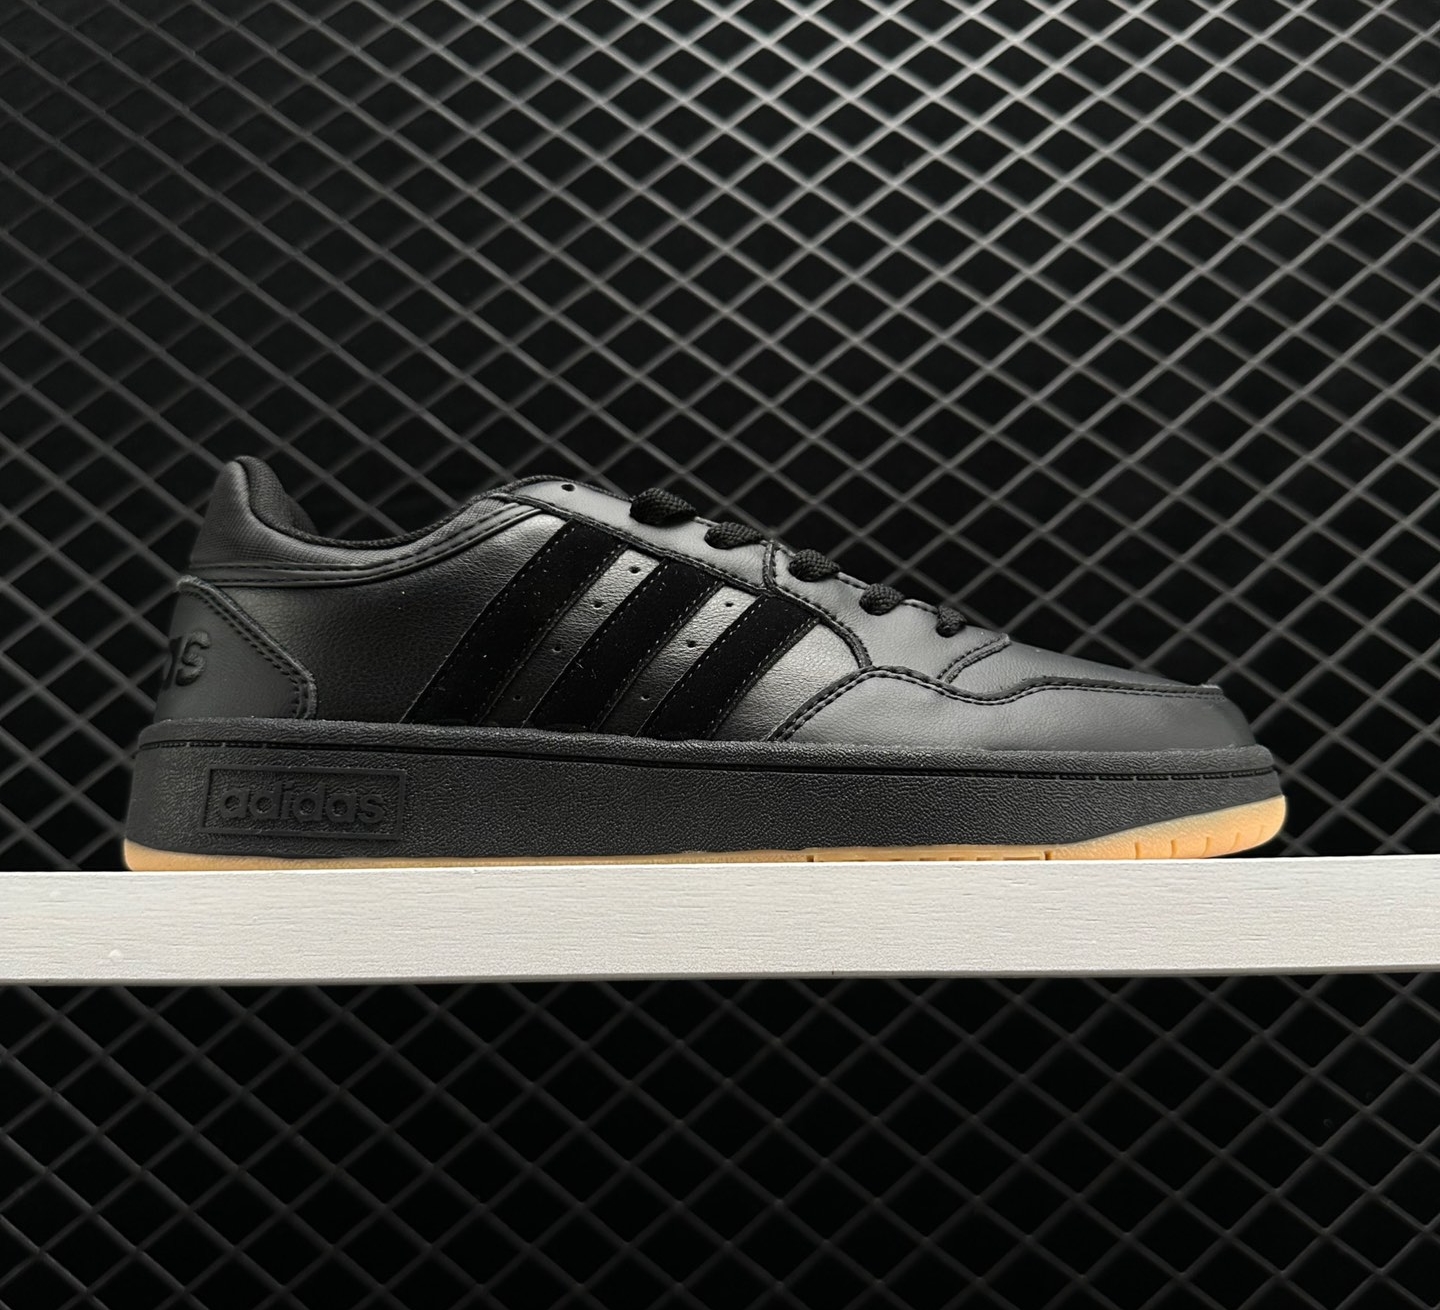 Adidas Hoops 3.0 Low 'Black Gum' GY4727 - Stylish & Versatile Sneakers